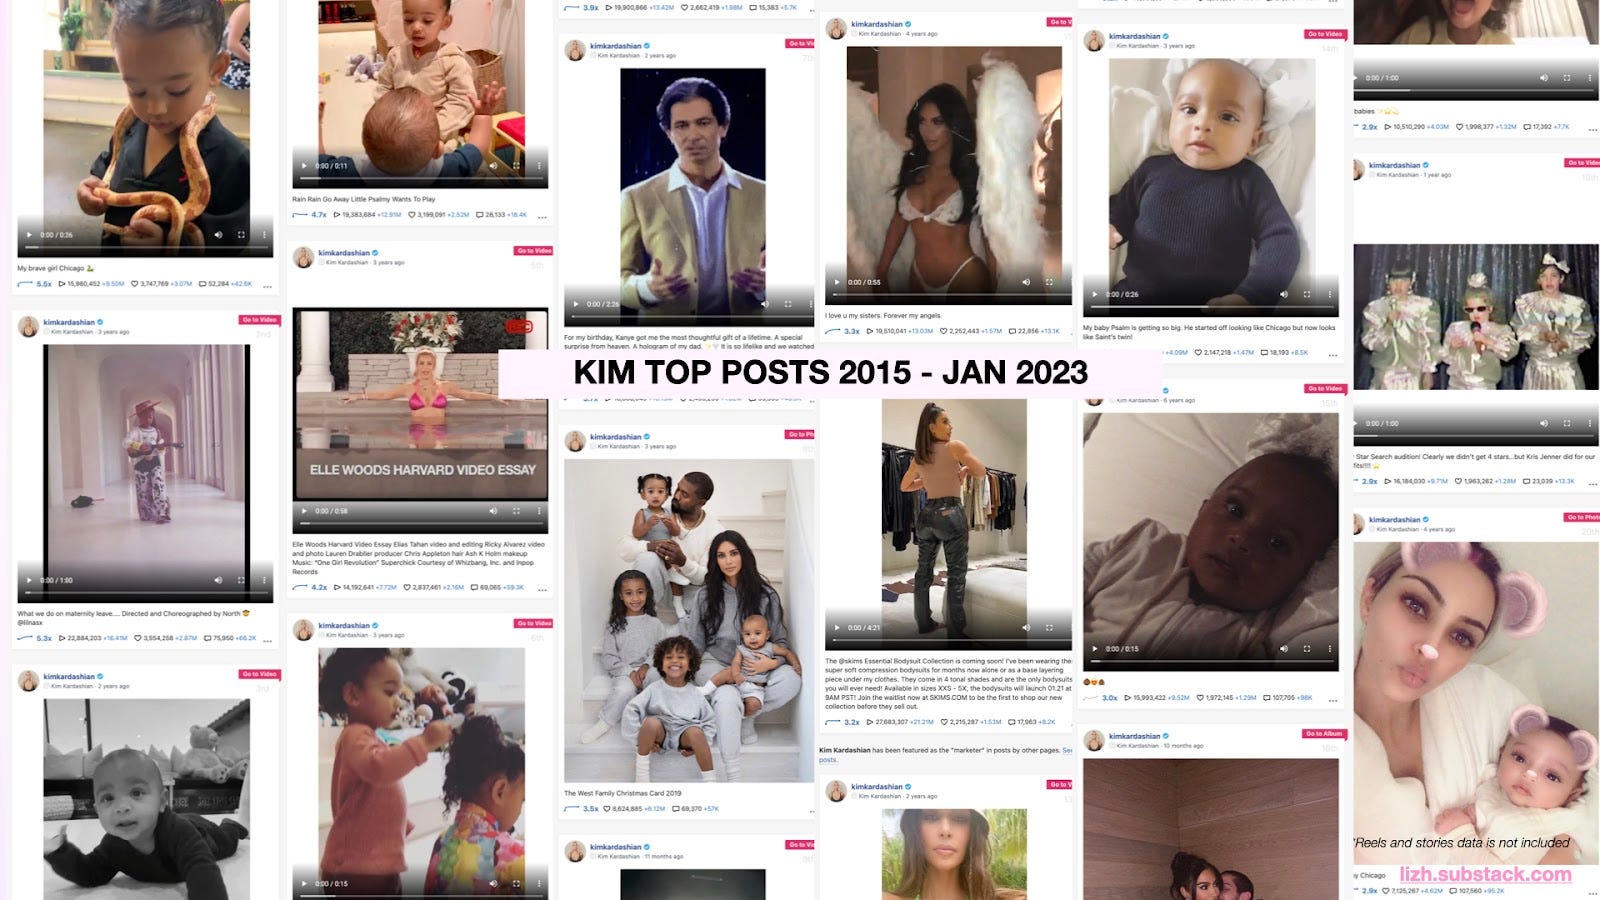 Social Strategy Deep Dive: The Kardashian's Instagram activity